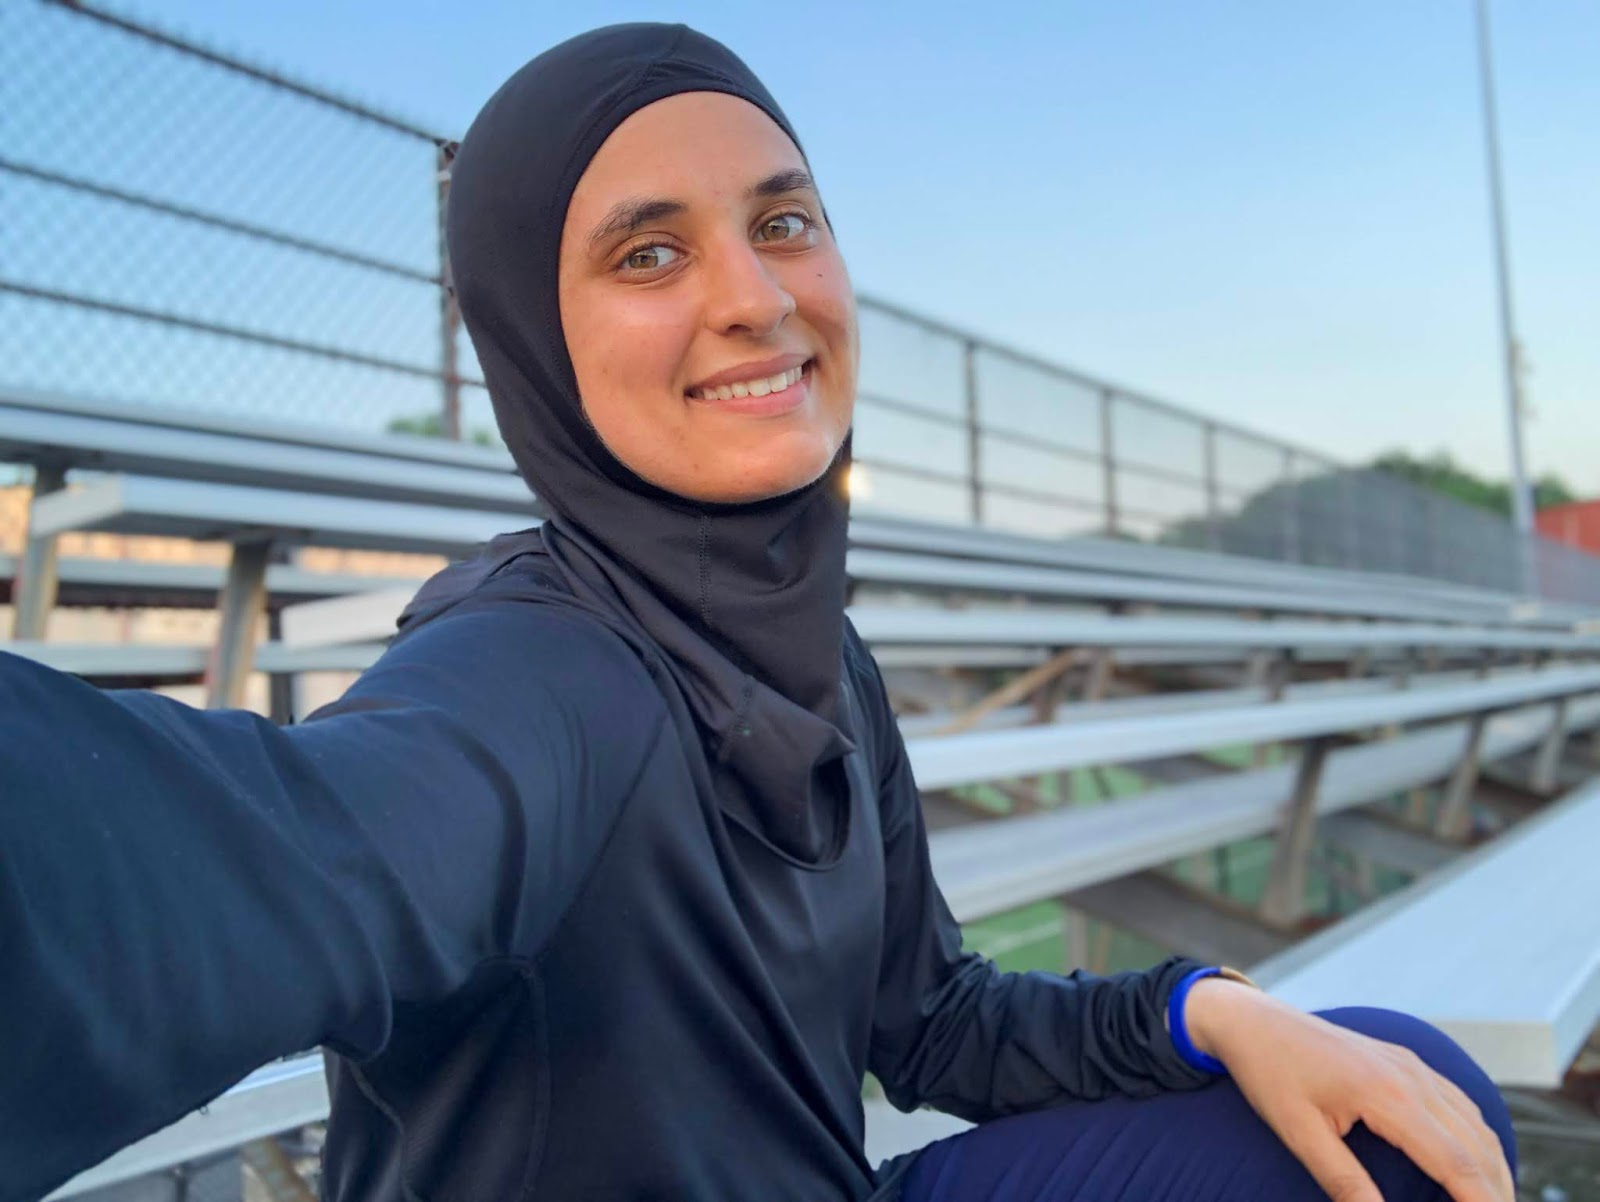 Sahara sitting on a bench at the track, smiling at camera in black nike hijab